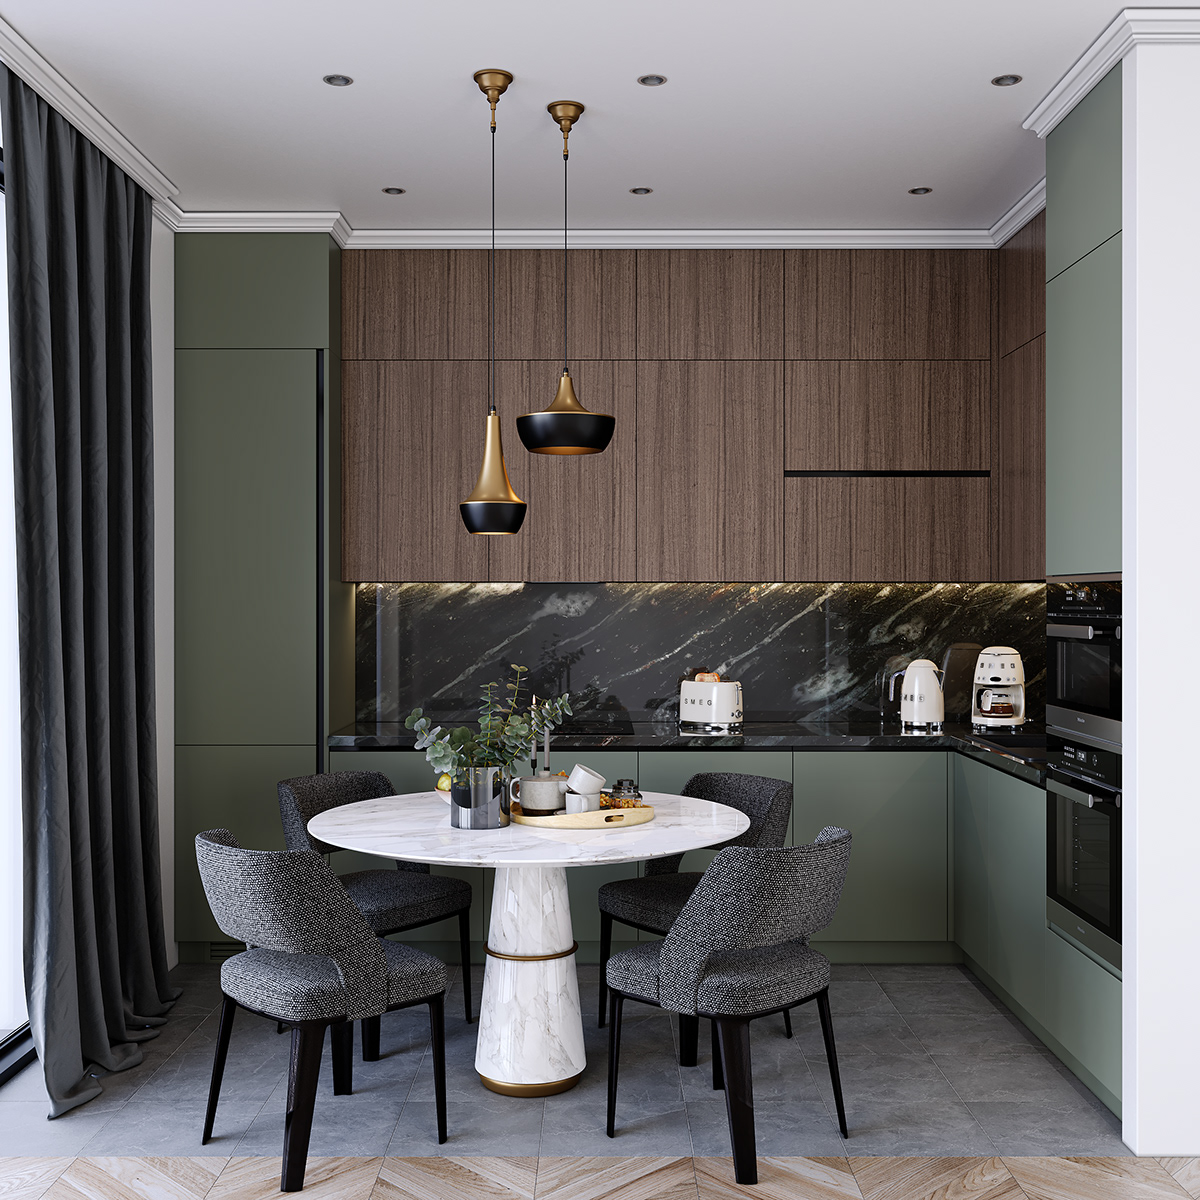 architecture interior design  visualization 3D 3ds max corona 3d modeling product design  kitchen